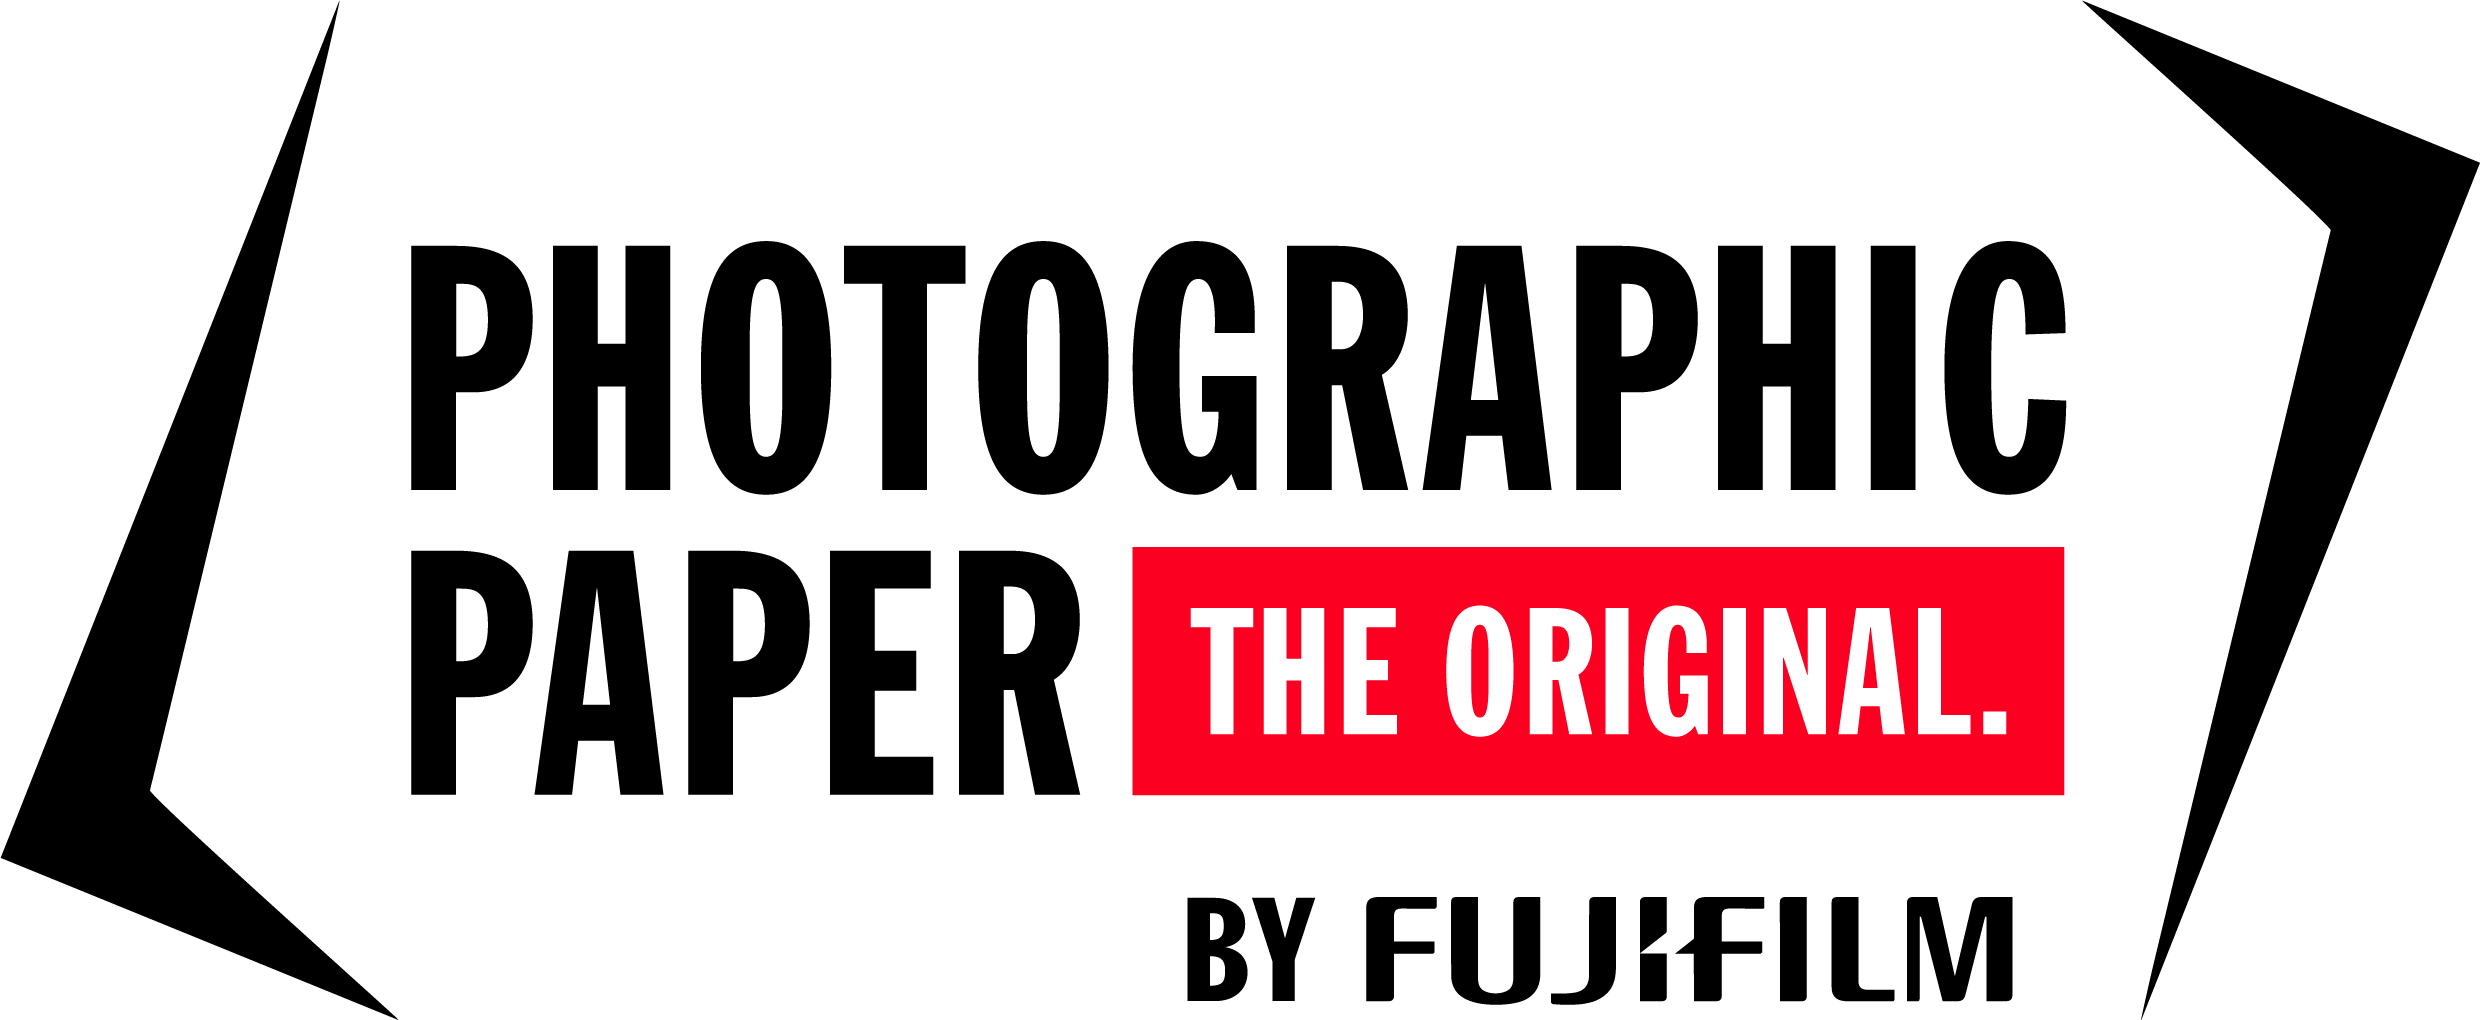 Photographic Paper the Original by FUJIFILM